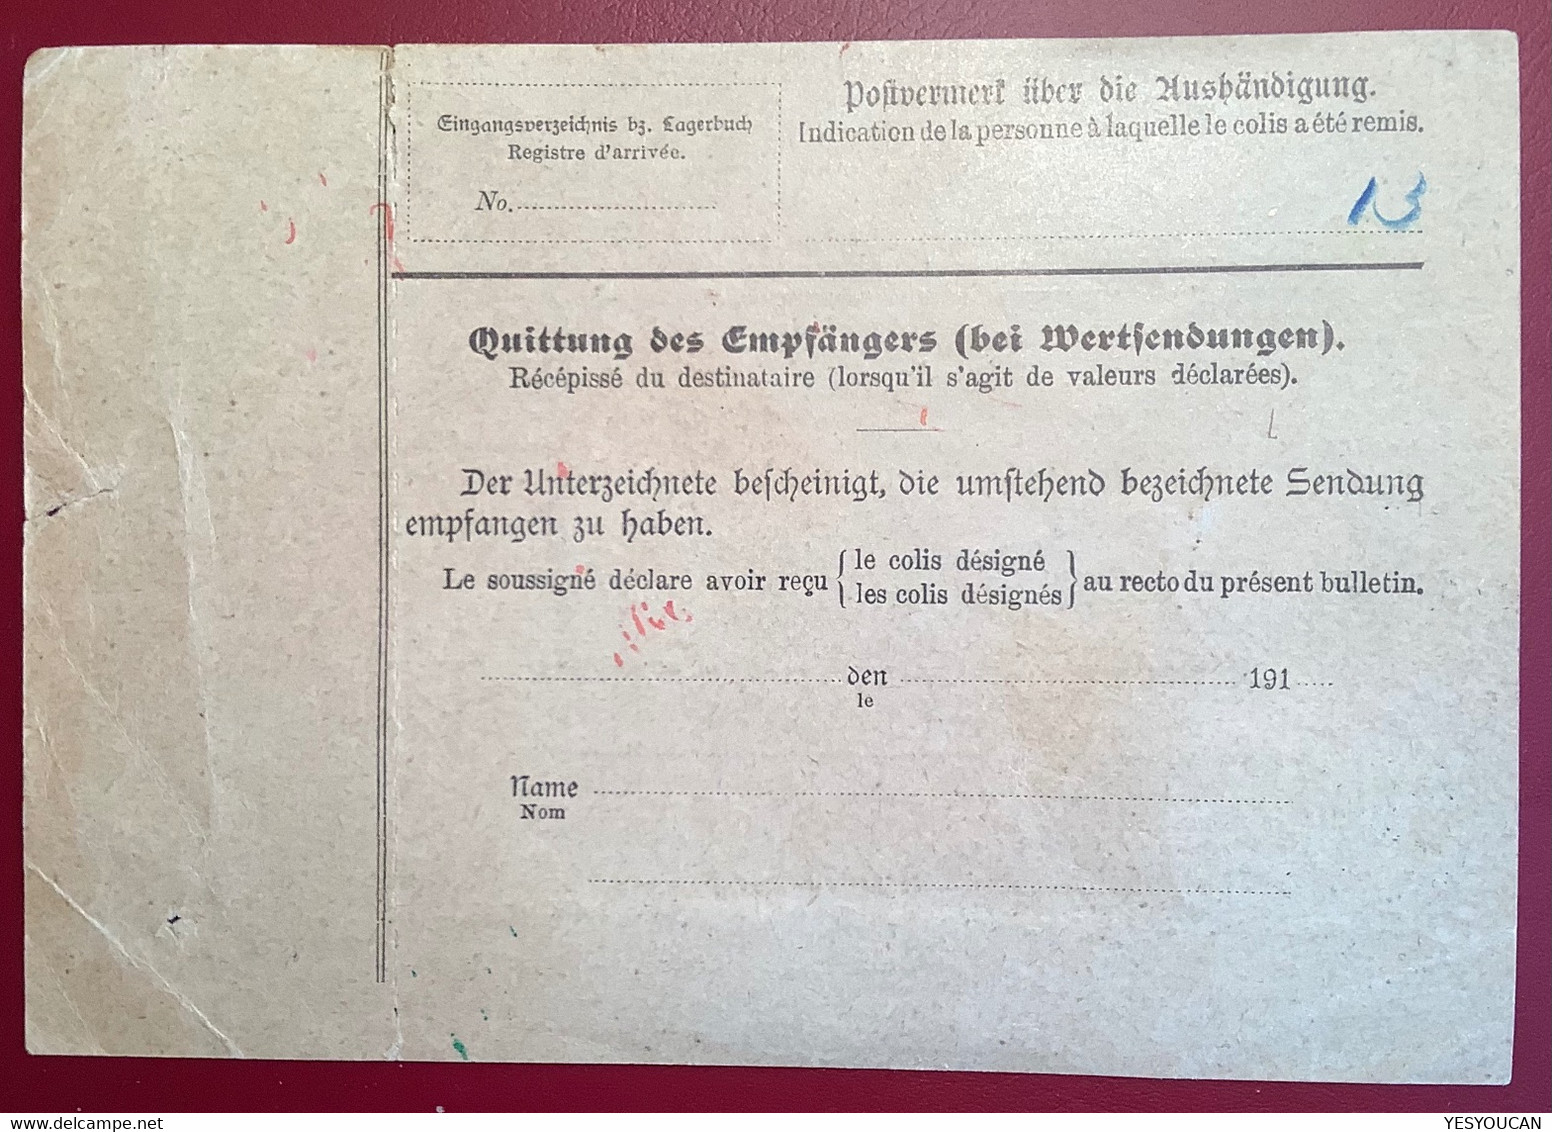 NEUSTADT HZGT COBURG 1915 Germania Mi 93 EF Paketkarte Via Basel>Nyon Schweiz (colis Postal Bayern - Brieven En Documenten